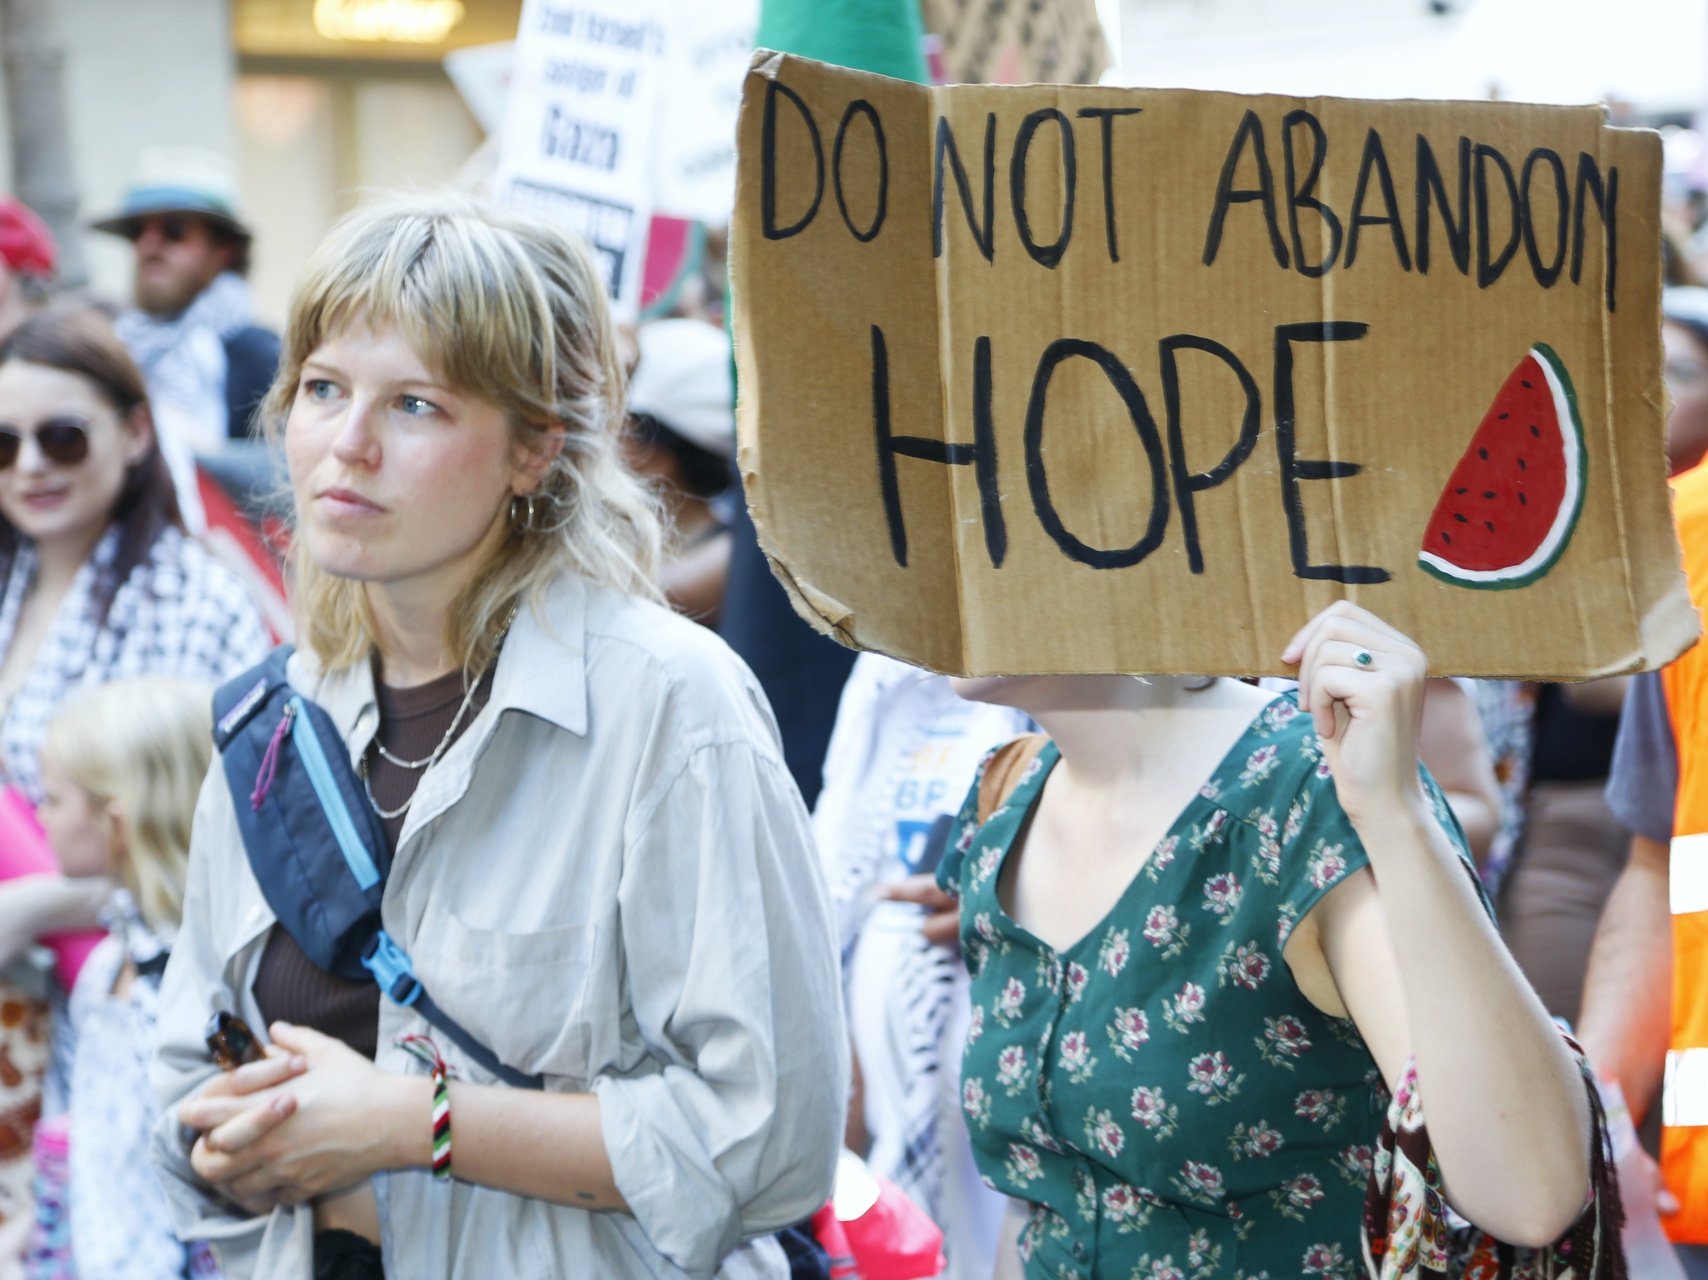 'Do not abandon hope', Meanjin/Brisbane